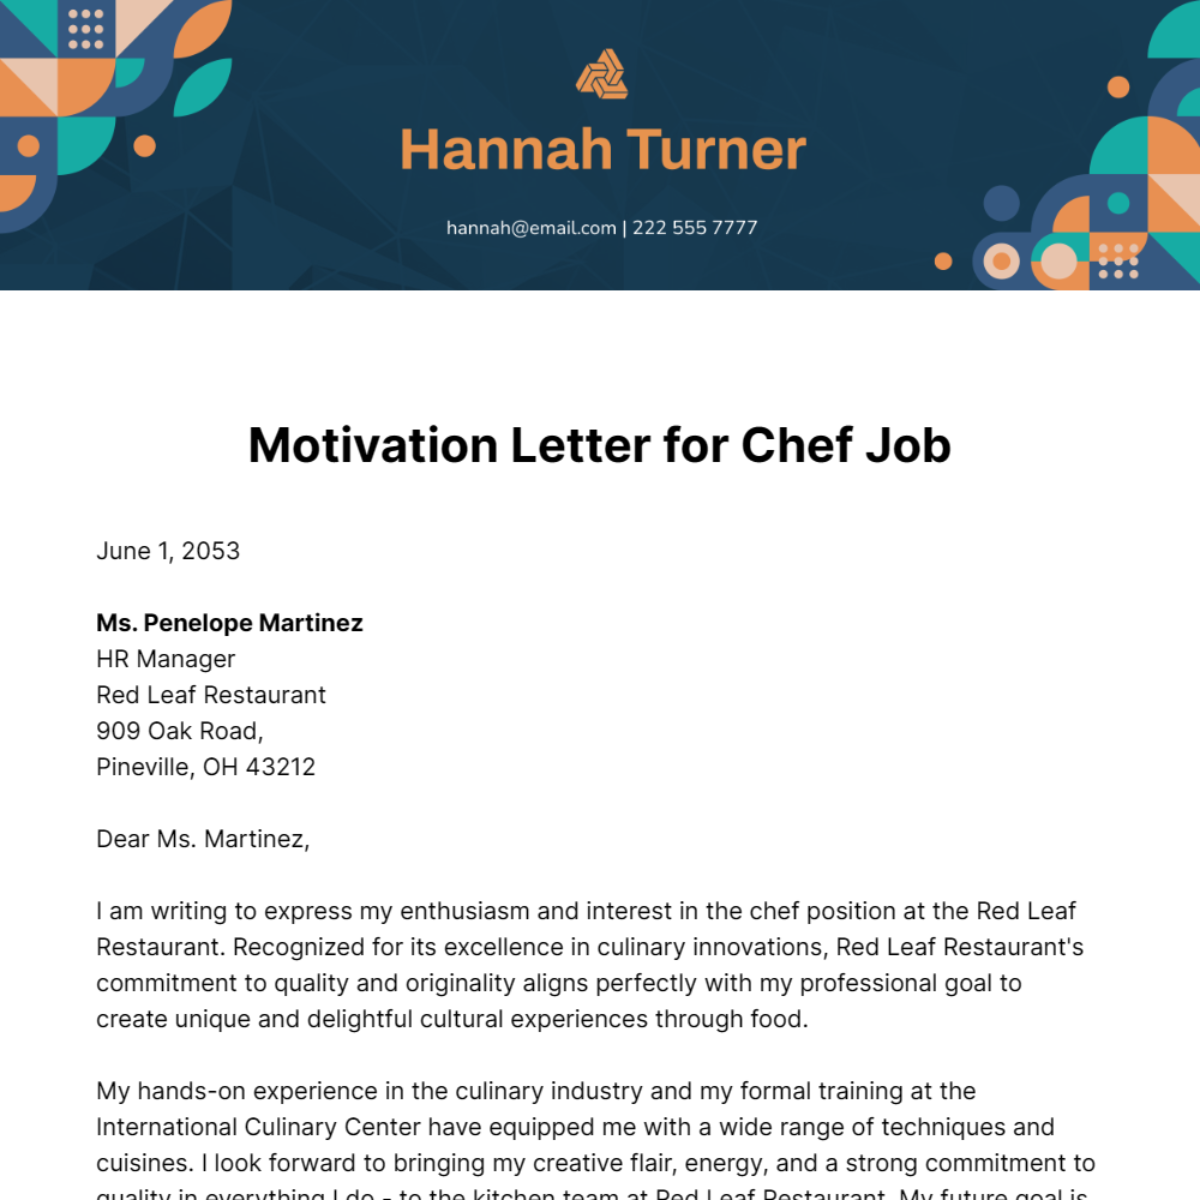 Motivation Letter for Chef Job Template